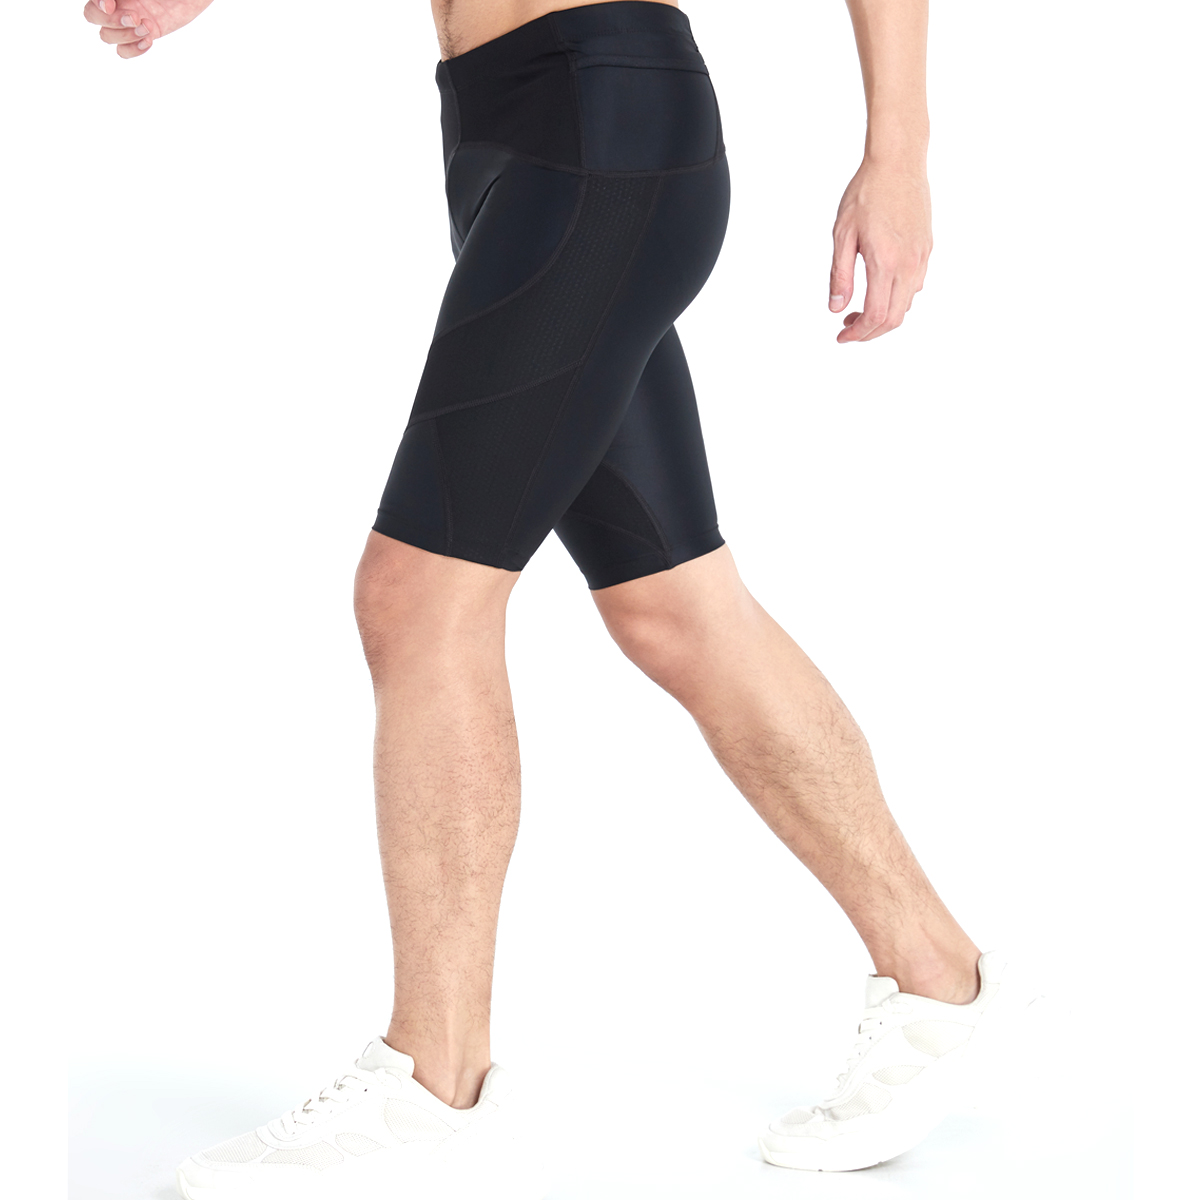 Men's TL Compression Shorts 2/4 Length กางเกงรัดกล้ามเนื้อขาสั้น